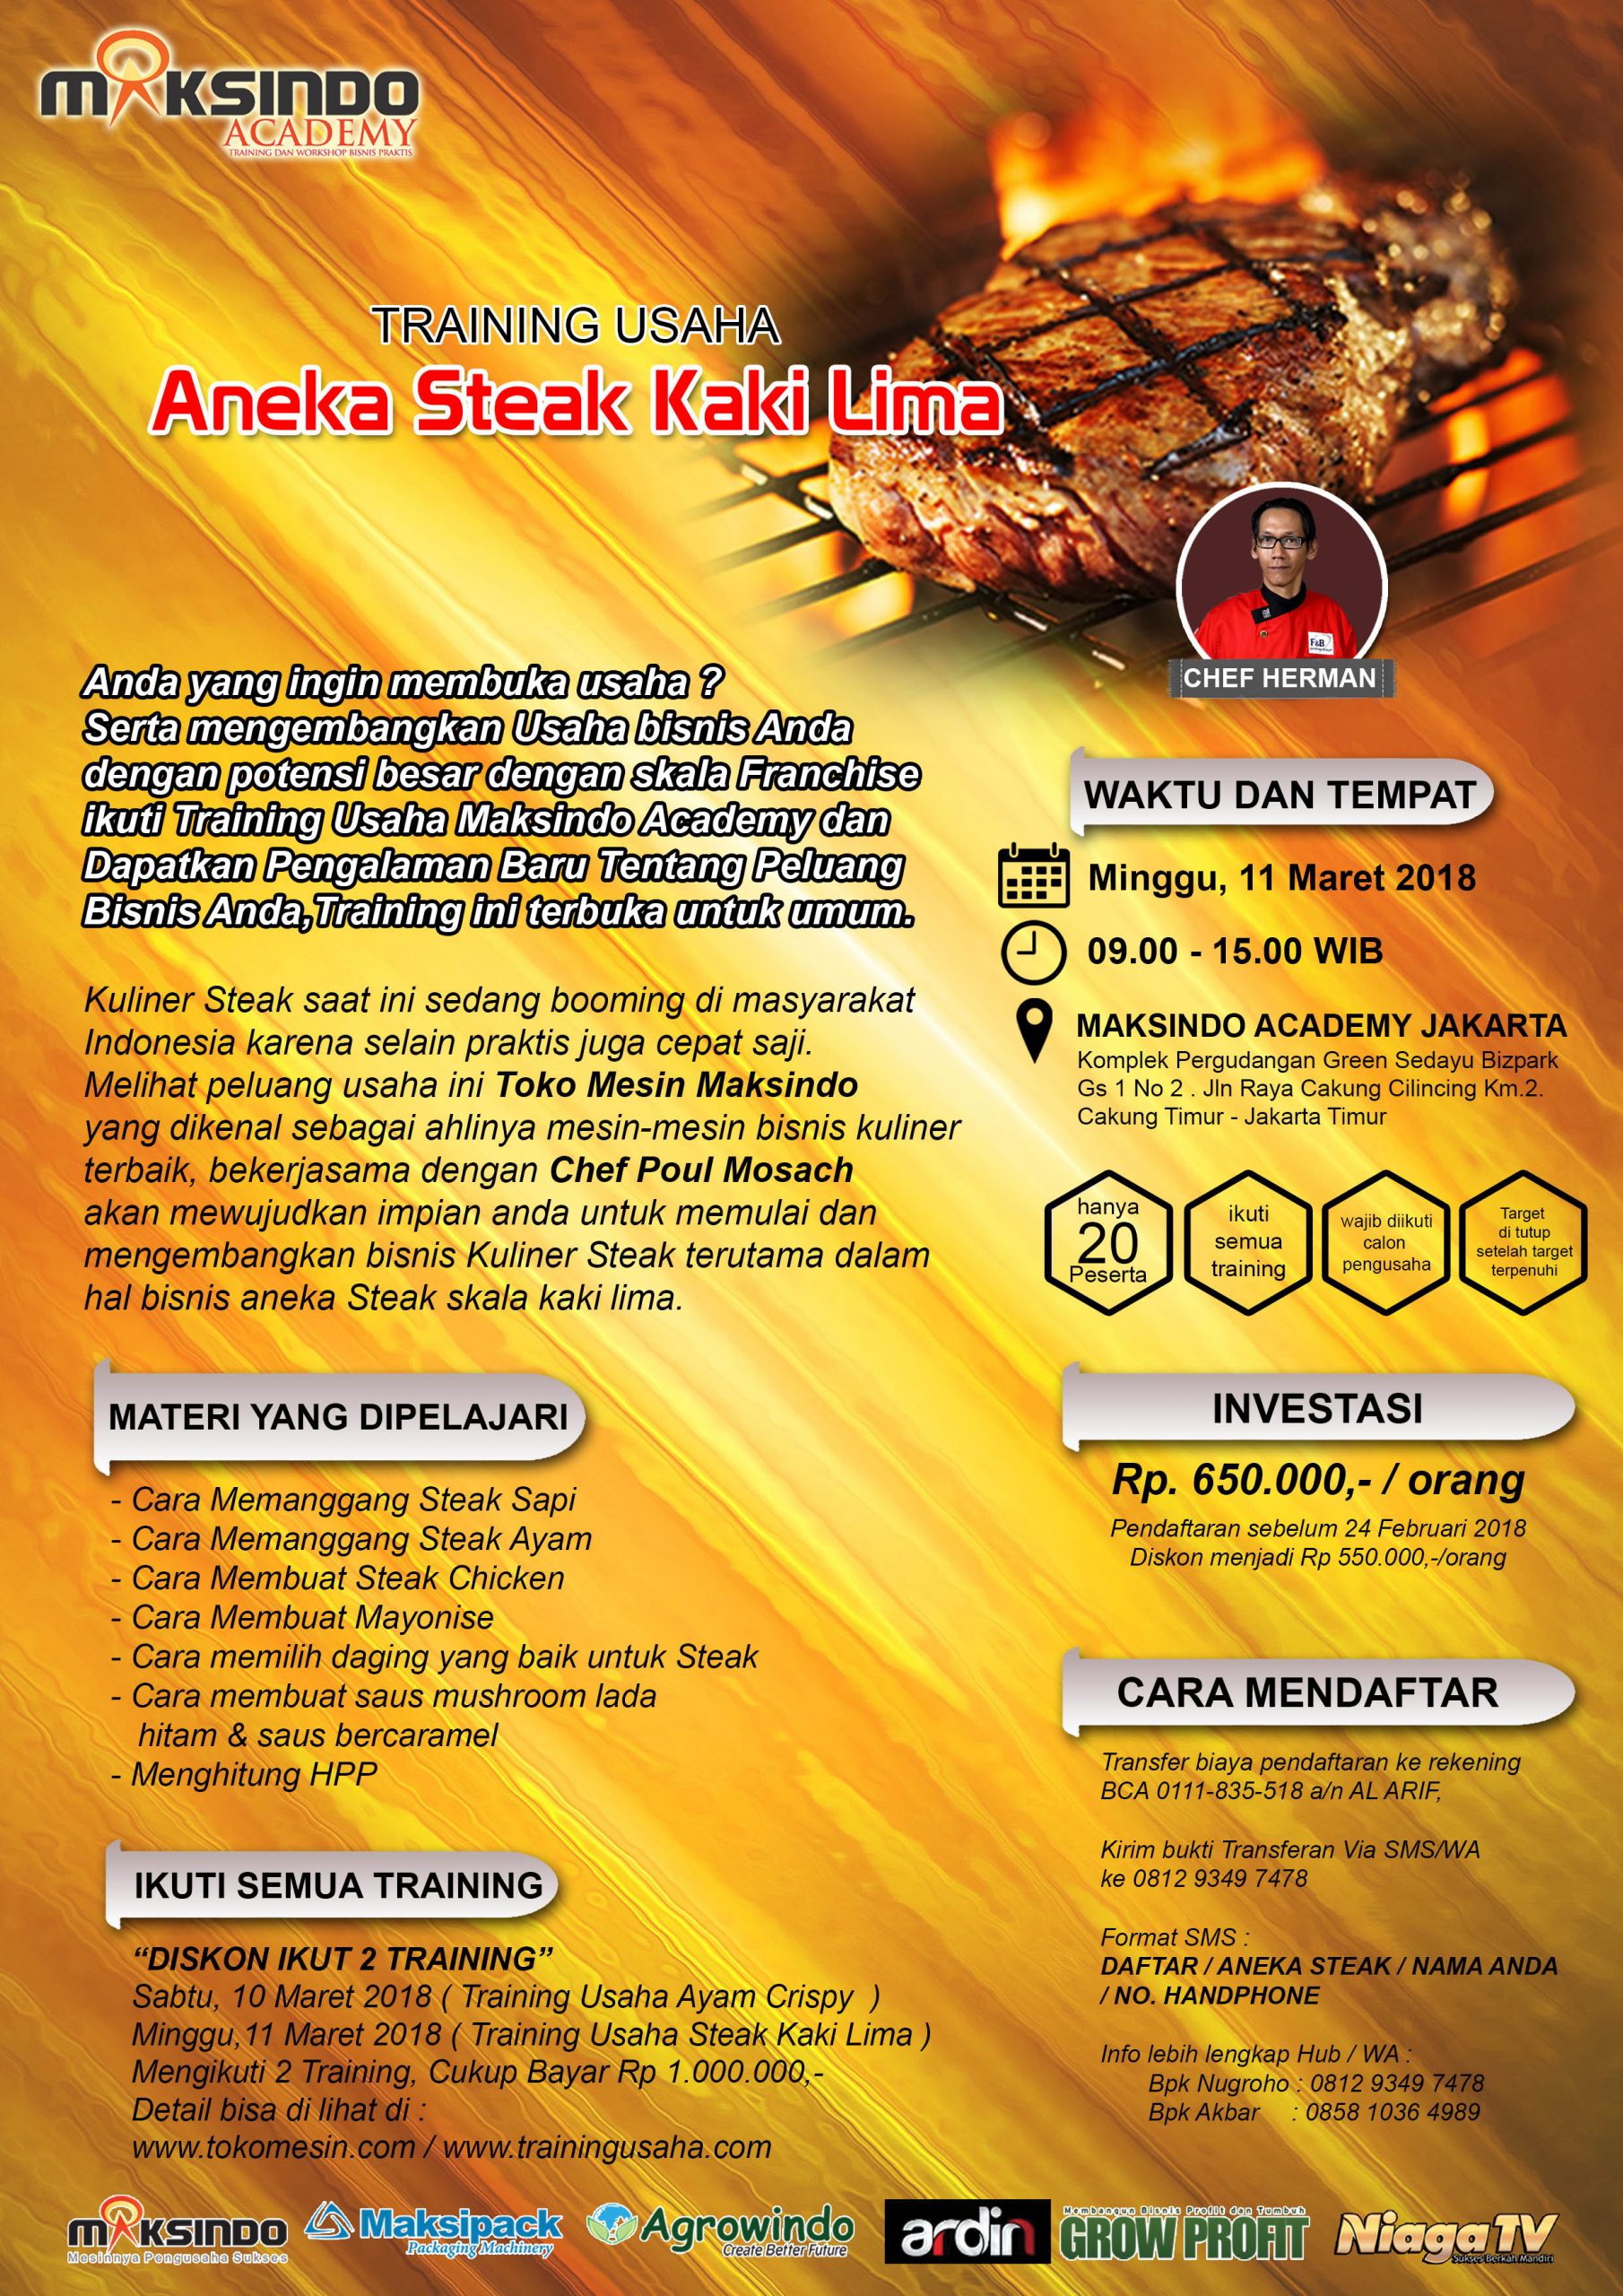 Training Usaha Aneka Steak Kaki Lima, 11 Maret 2018